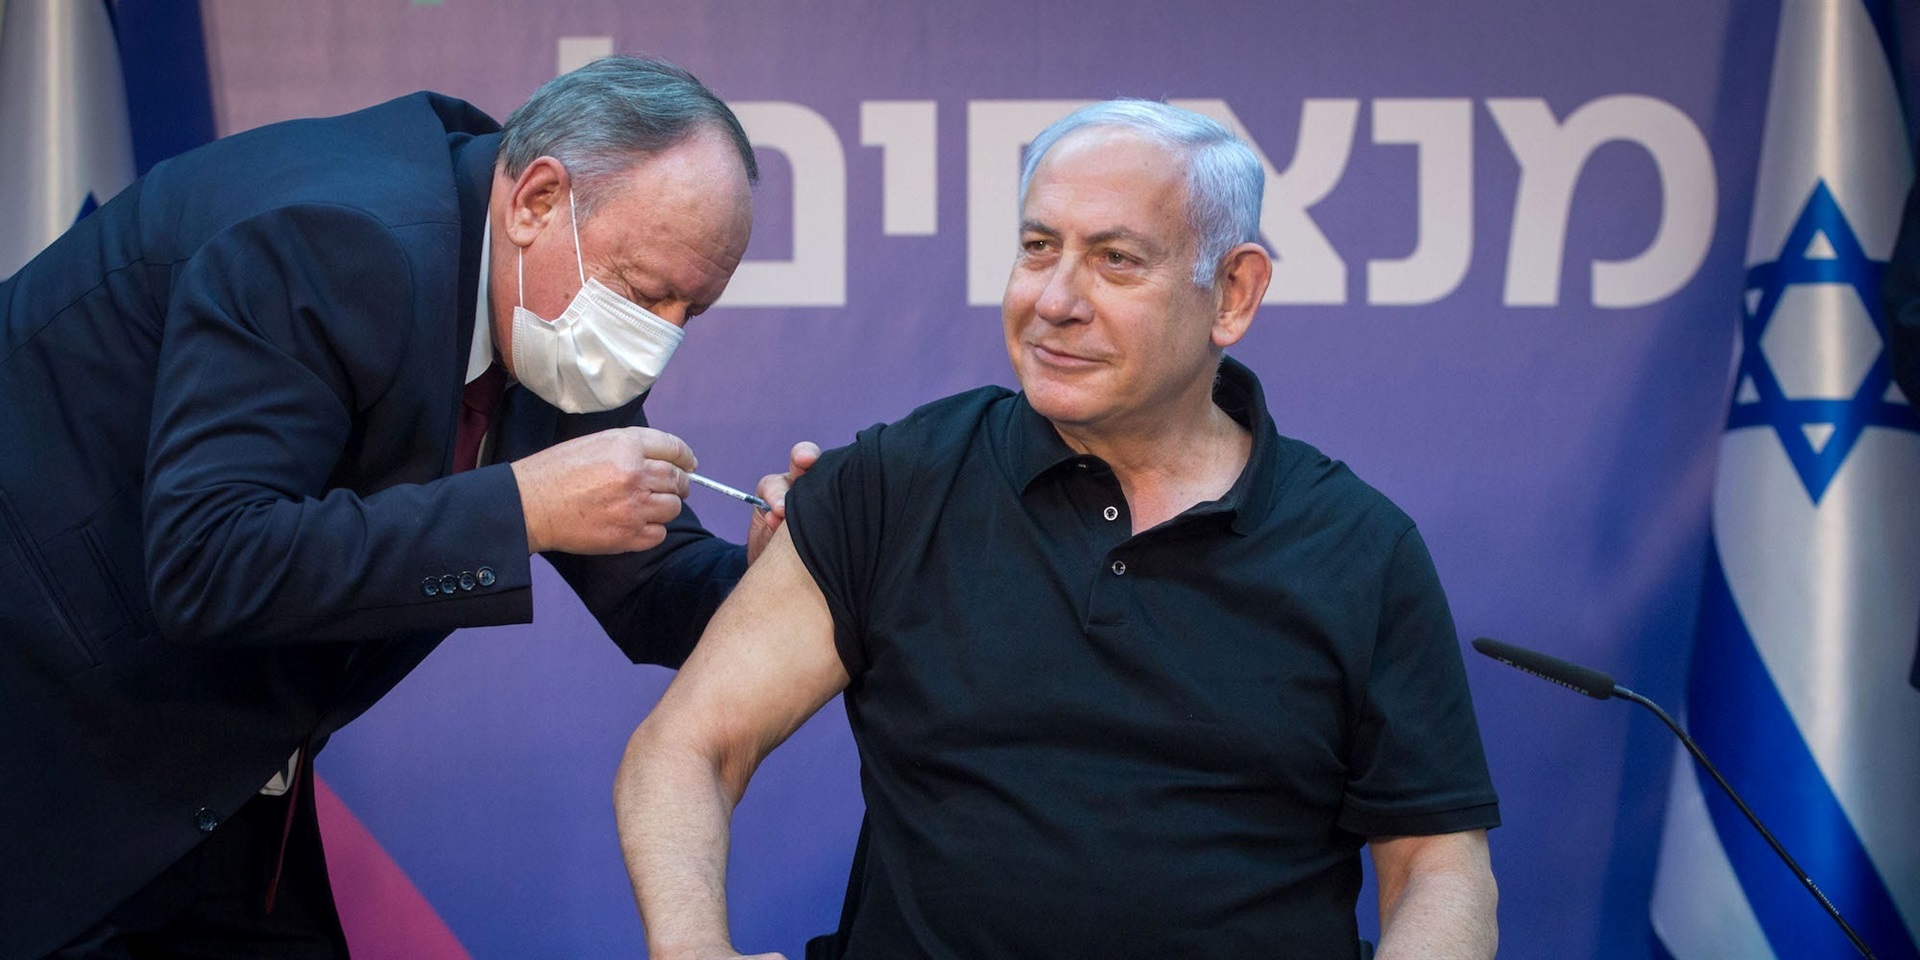 Israeli Prime Minister Minister Benjamin Netanyahu gets his second dose of the coronavirus vaccine on January 9, 2021.
